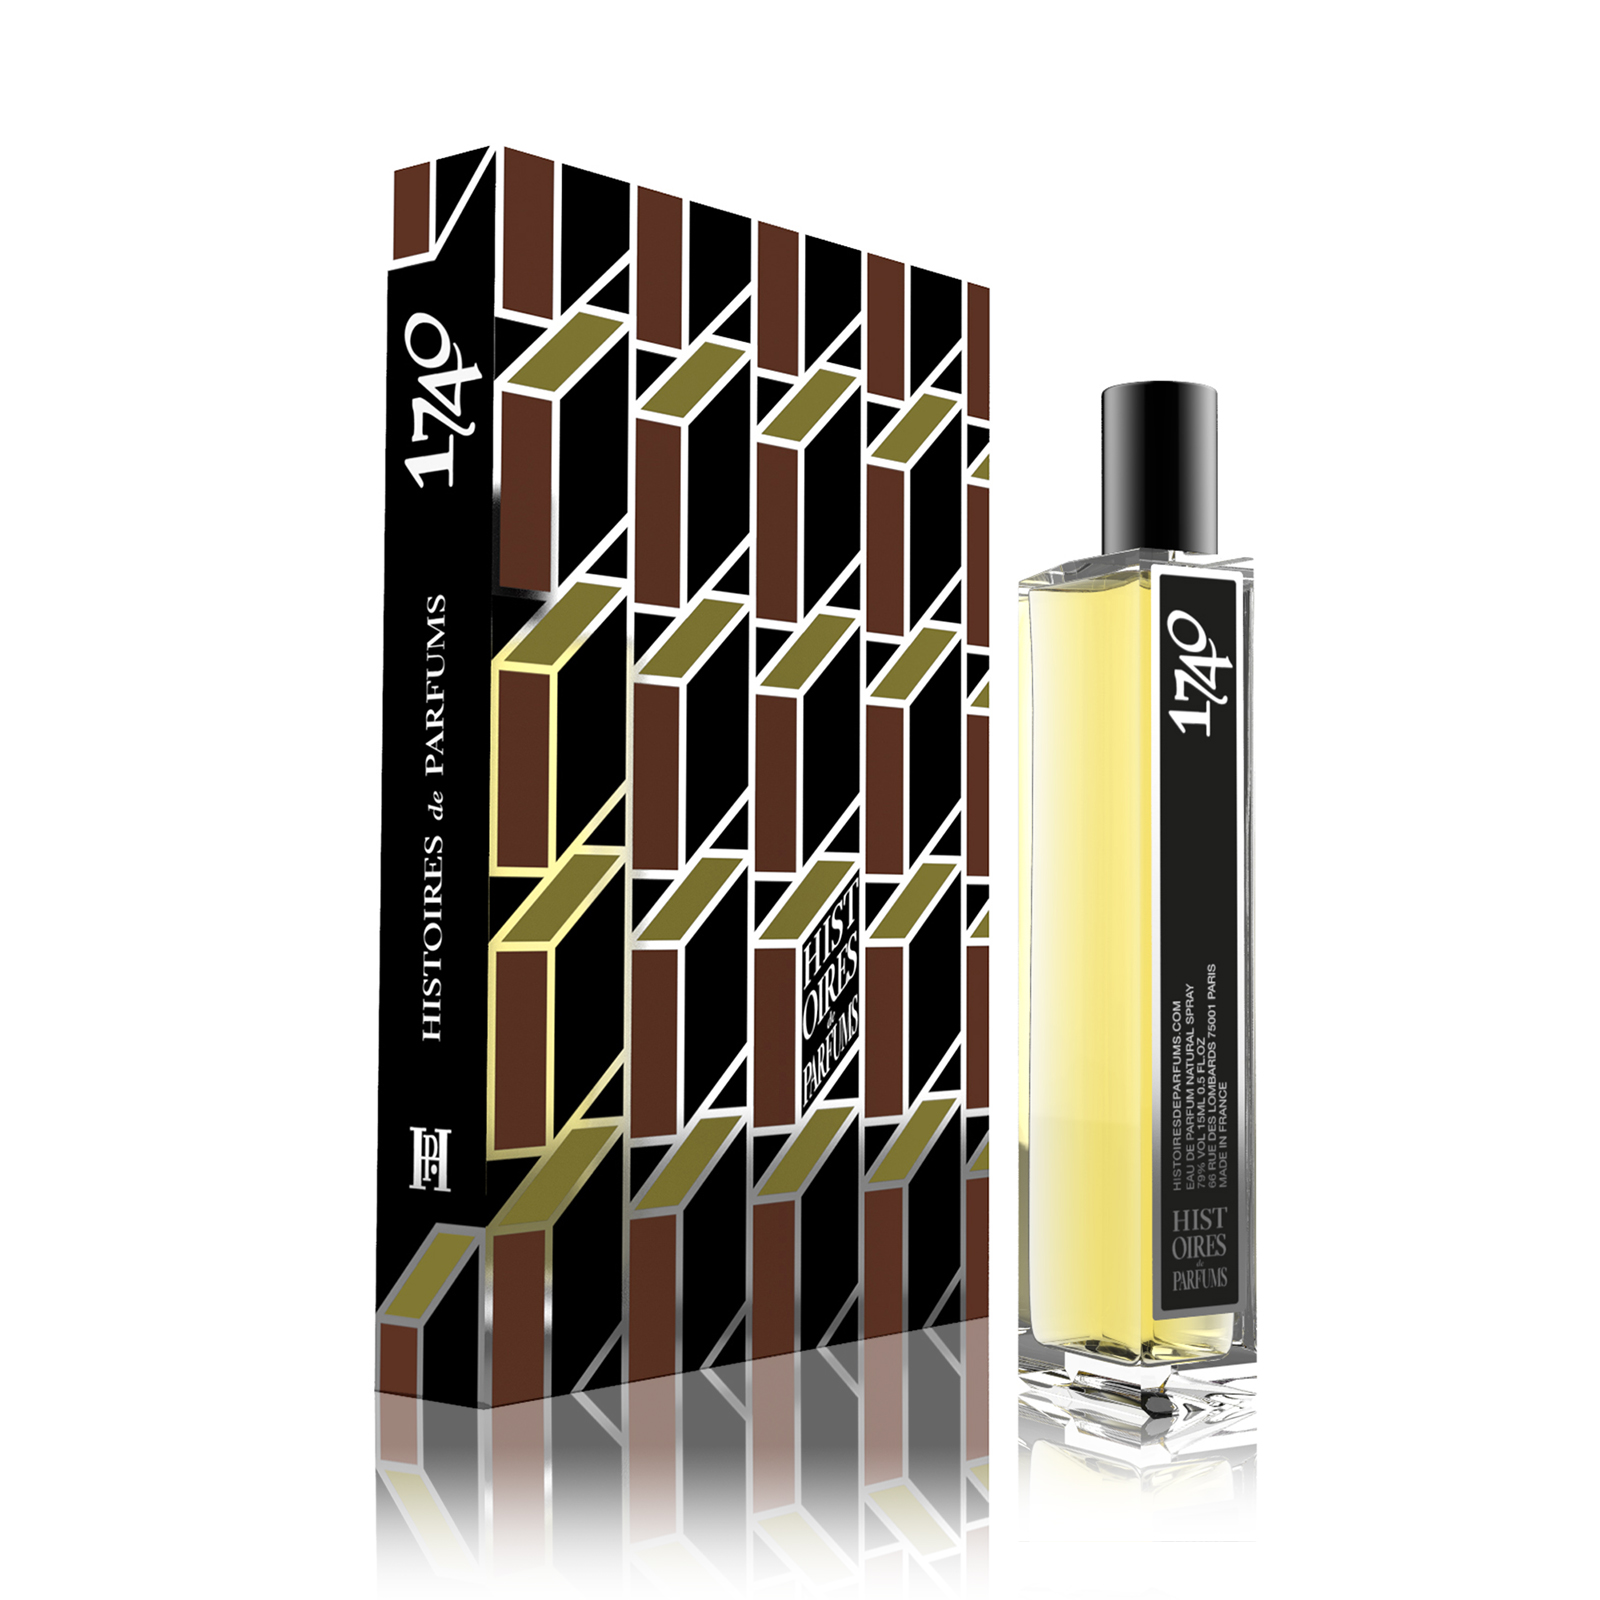 Купить Histoires de Parfums 1740 15 ml.